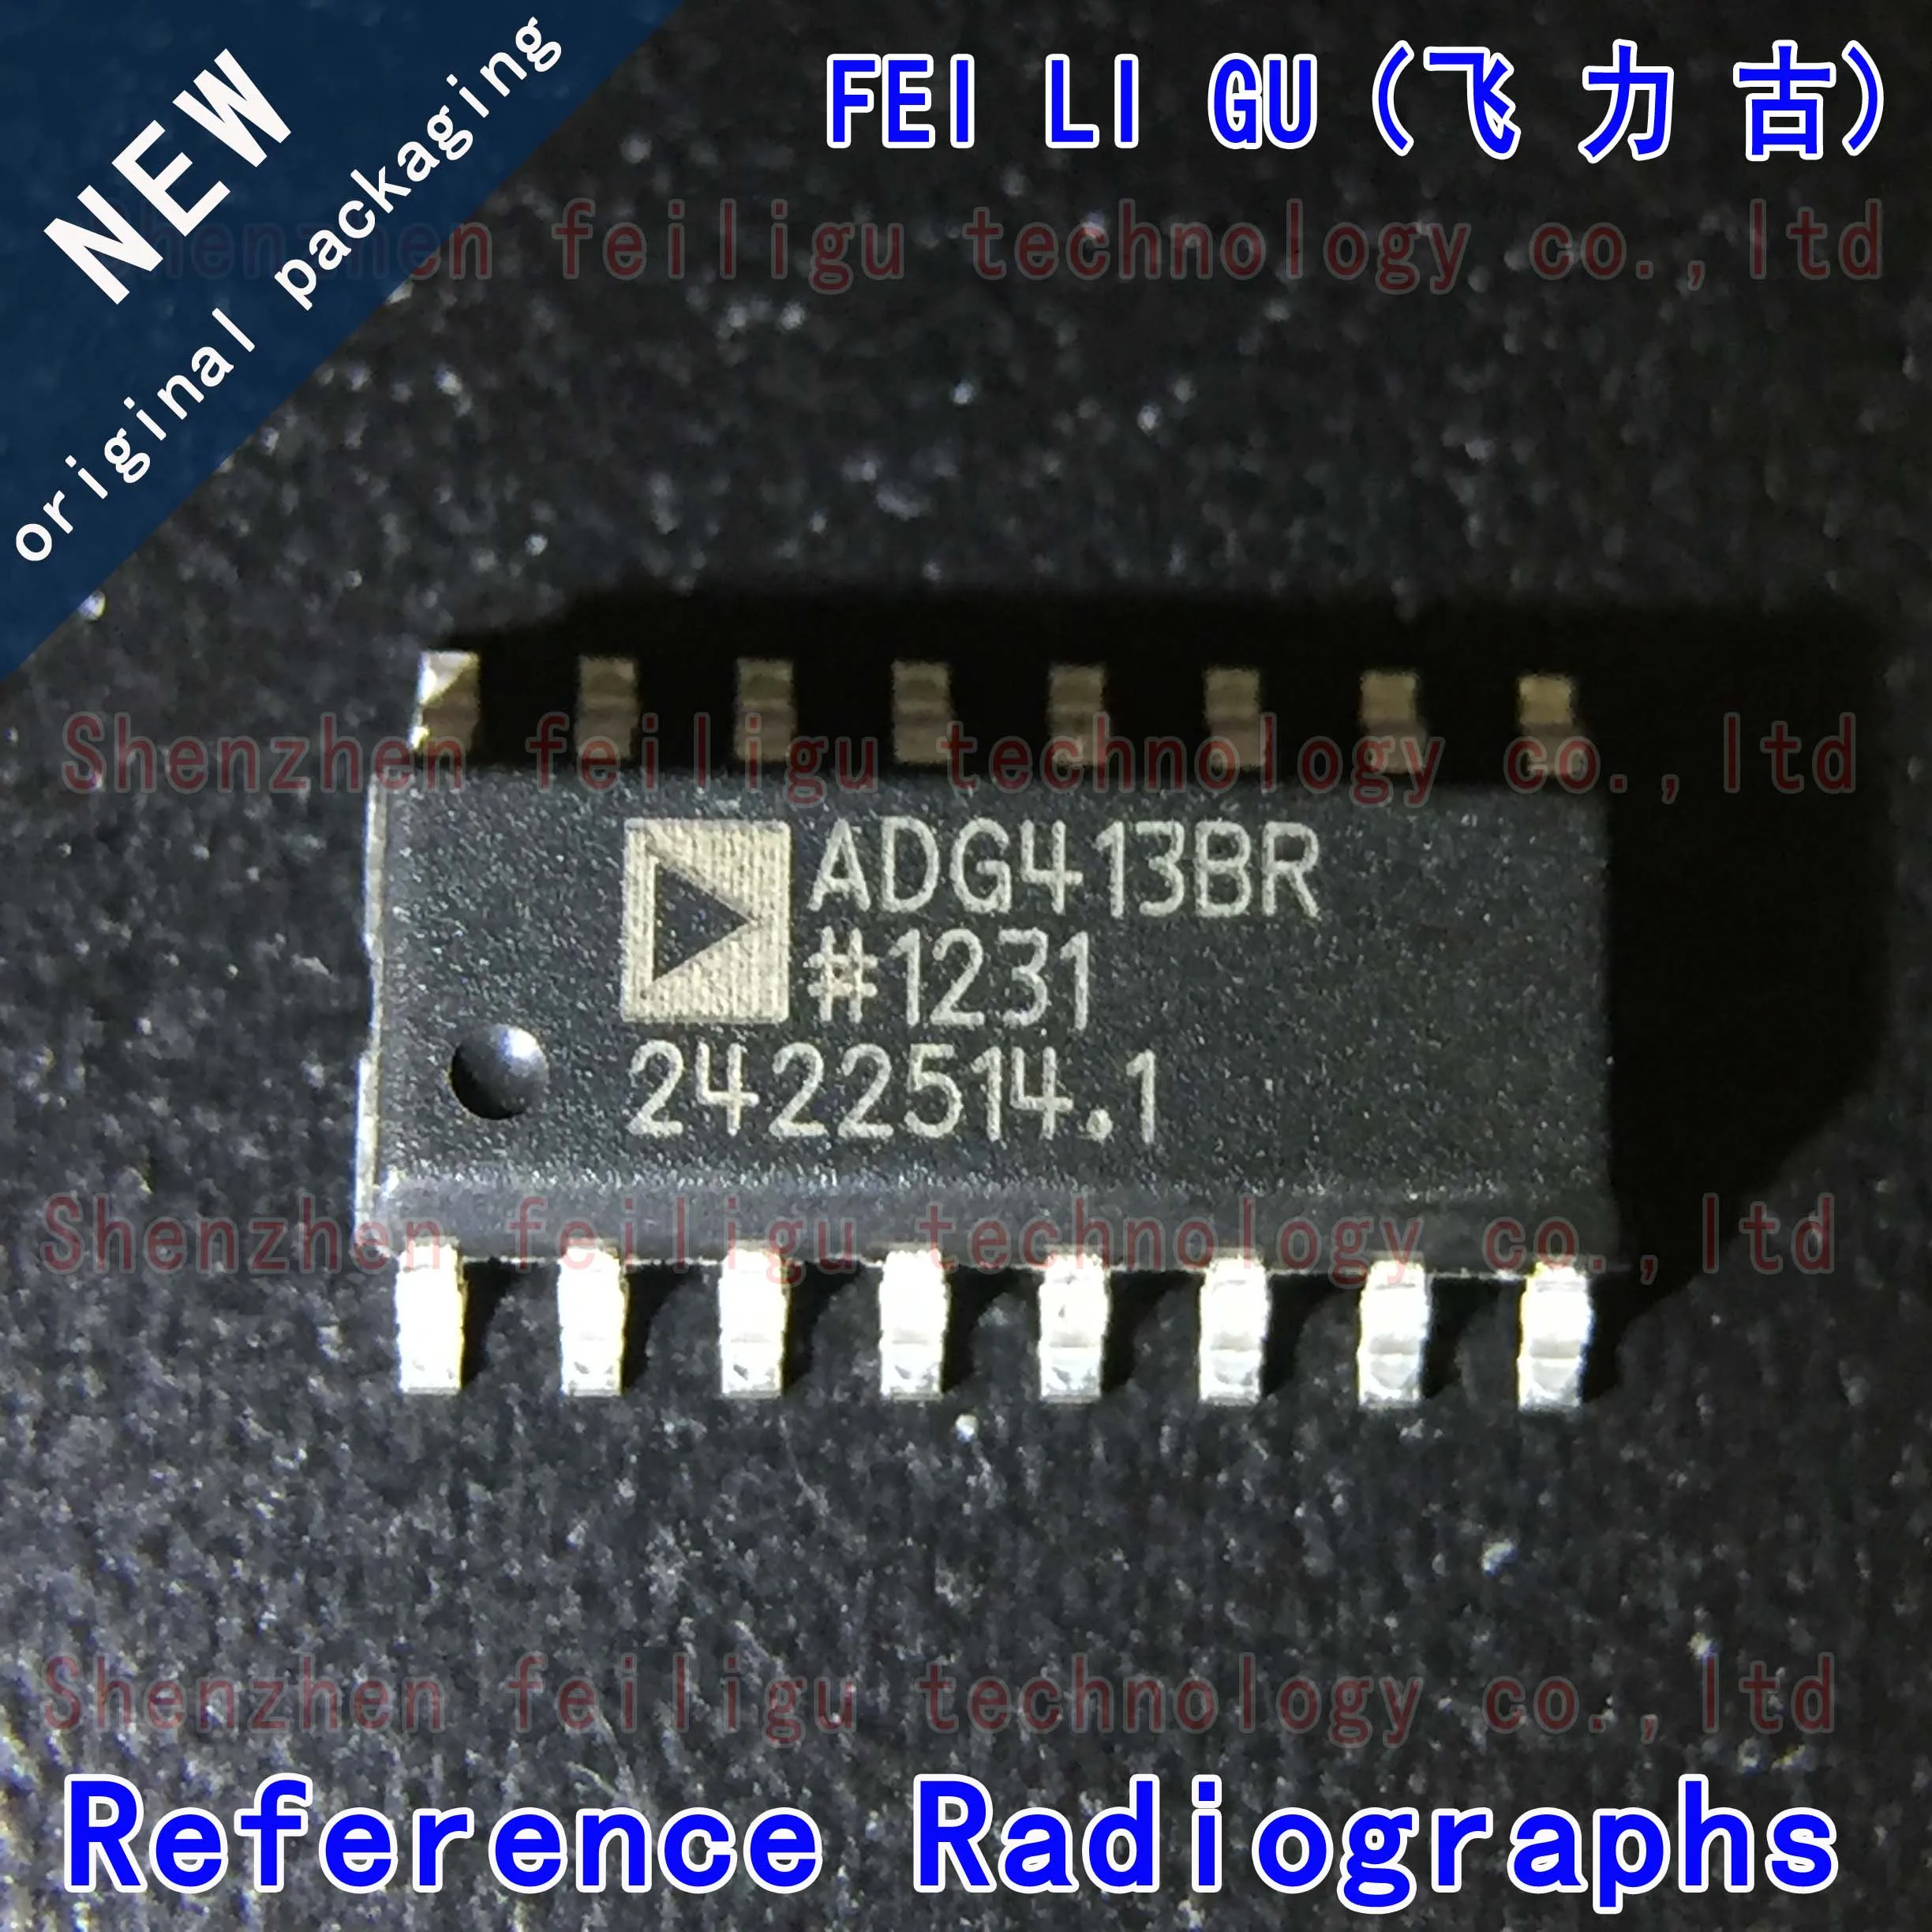 1 5pcs adg413brz adg413br adg413 sop16 analog switch chip ic in stock 1~30PCS 100% New original ADG413BRZ-REEL ADG413BRZ ADG413BR ADG413 Package:SOP16 Analog Switch/Multiplexer Chip